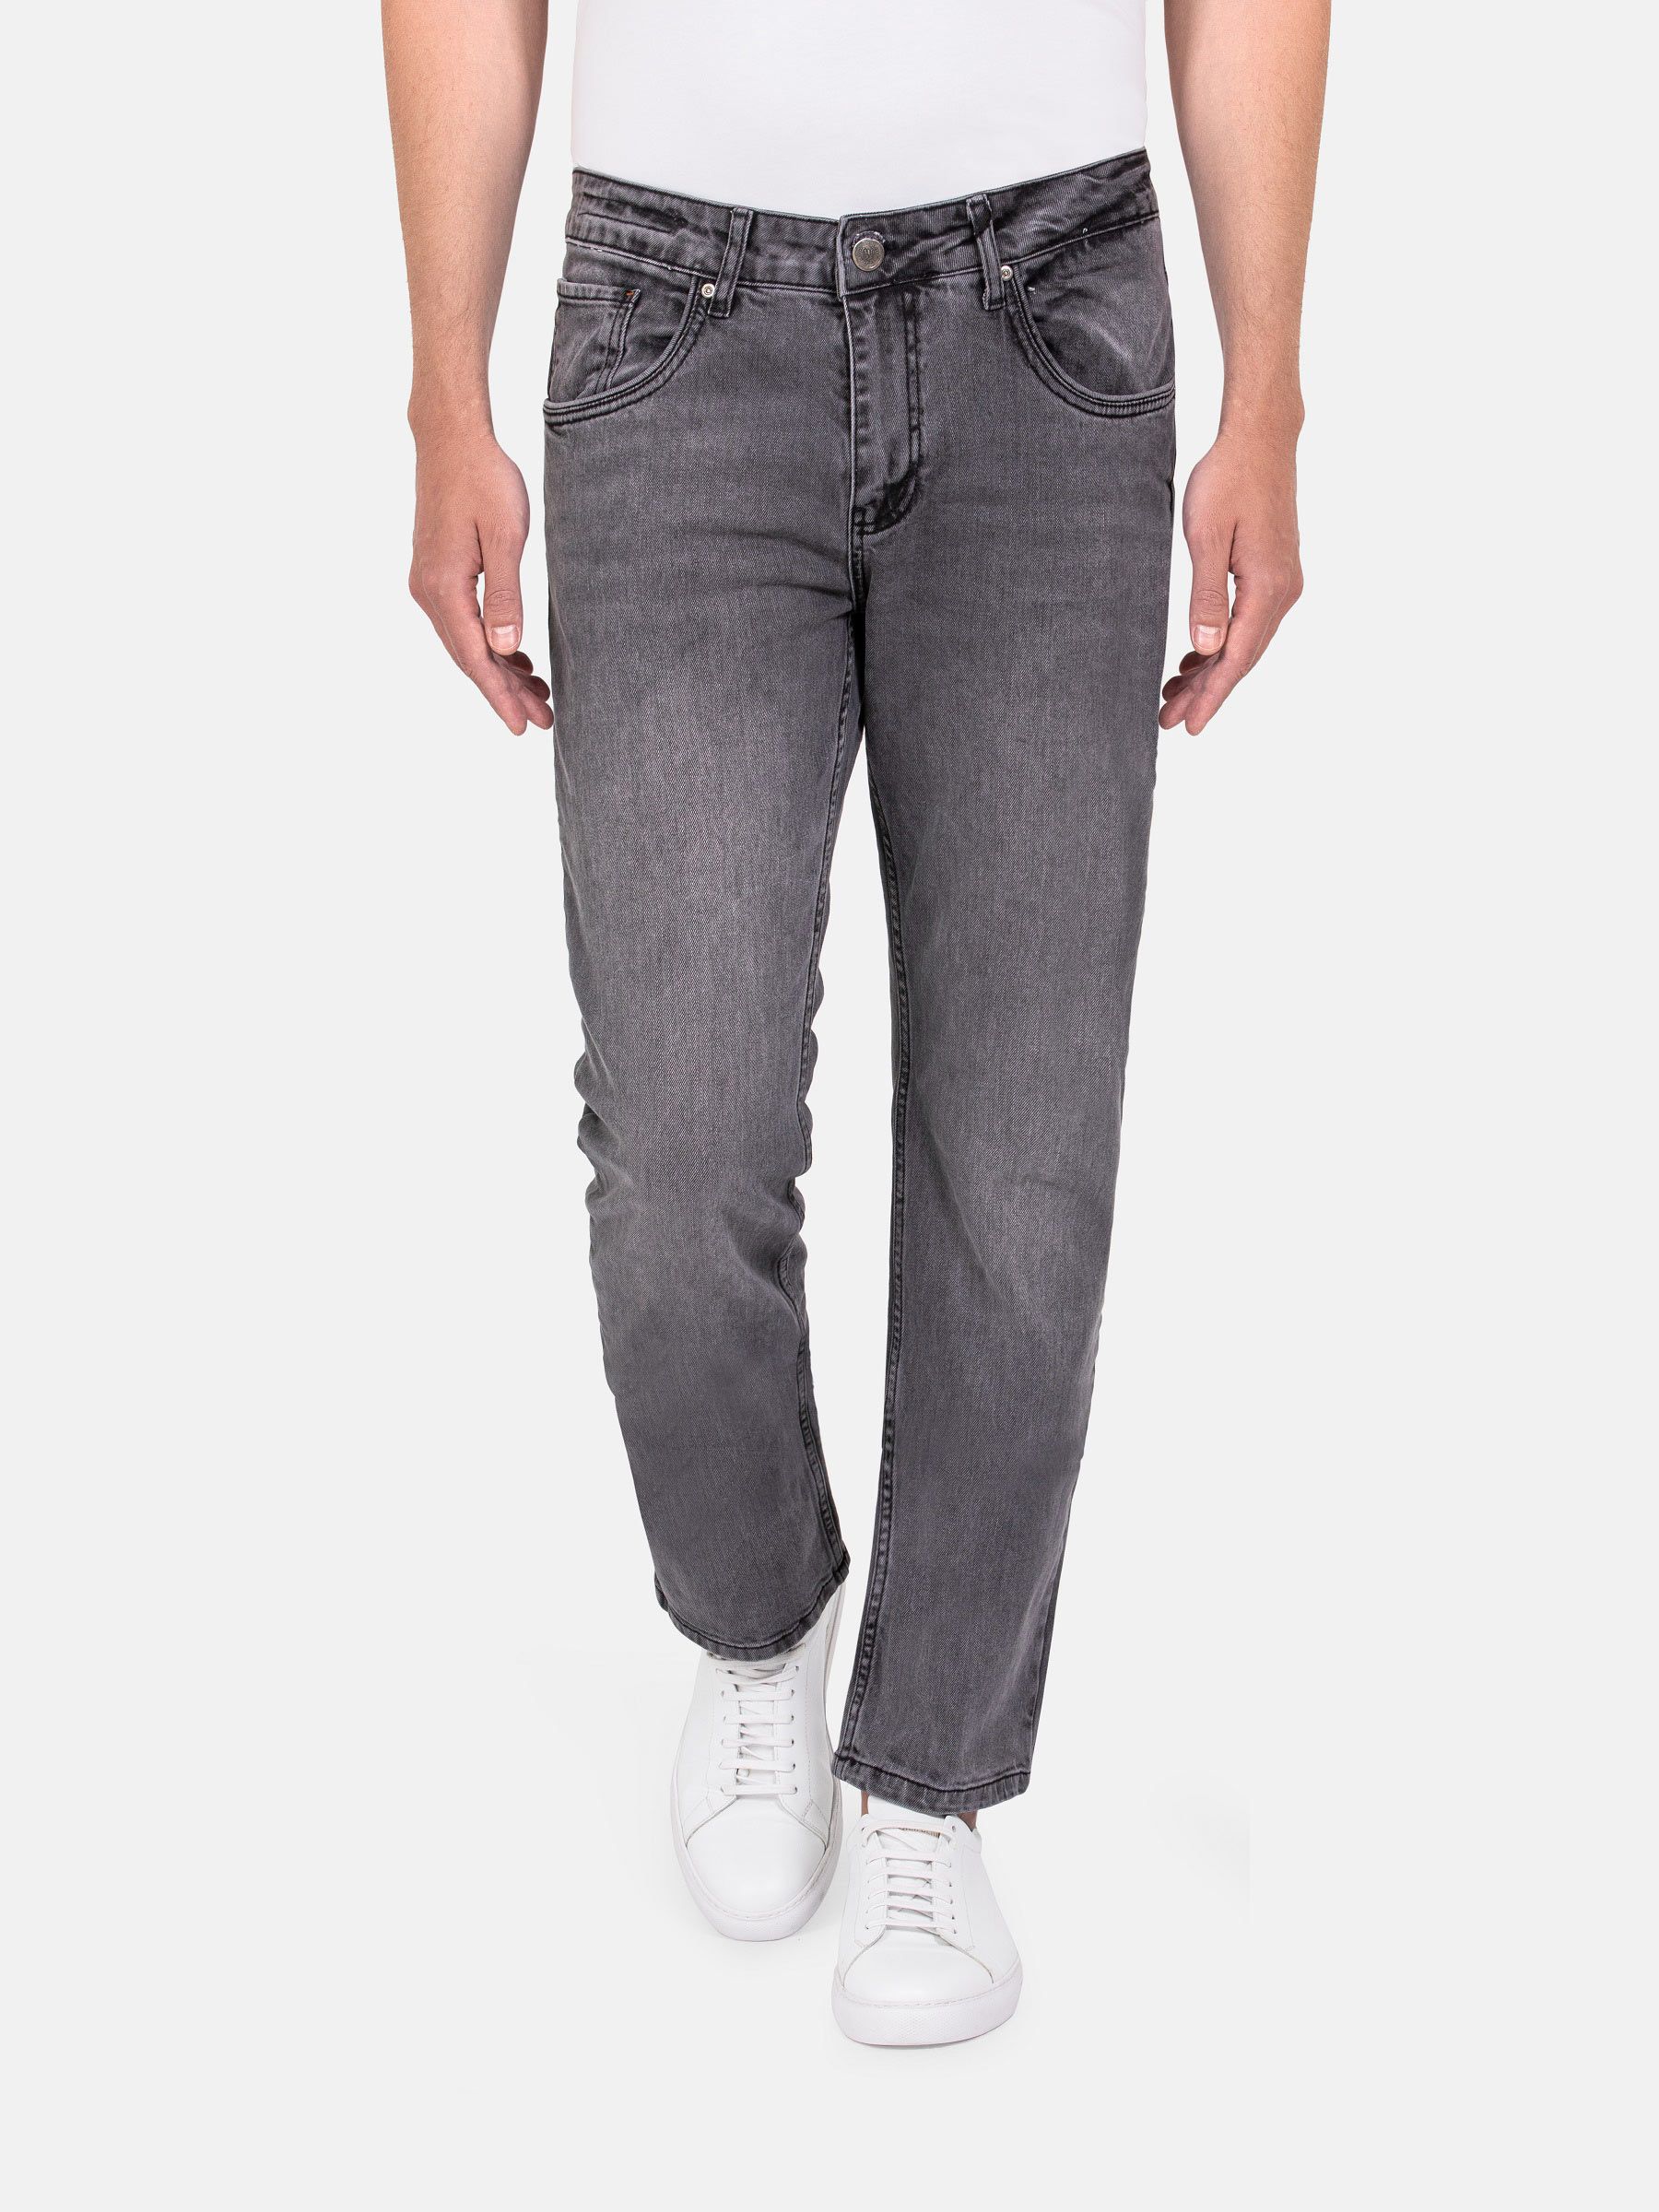 Men's regular fit faded jeans-Men's regular jeans-casual jeans